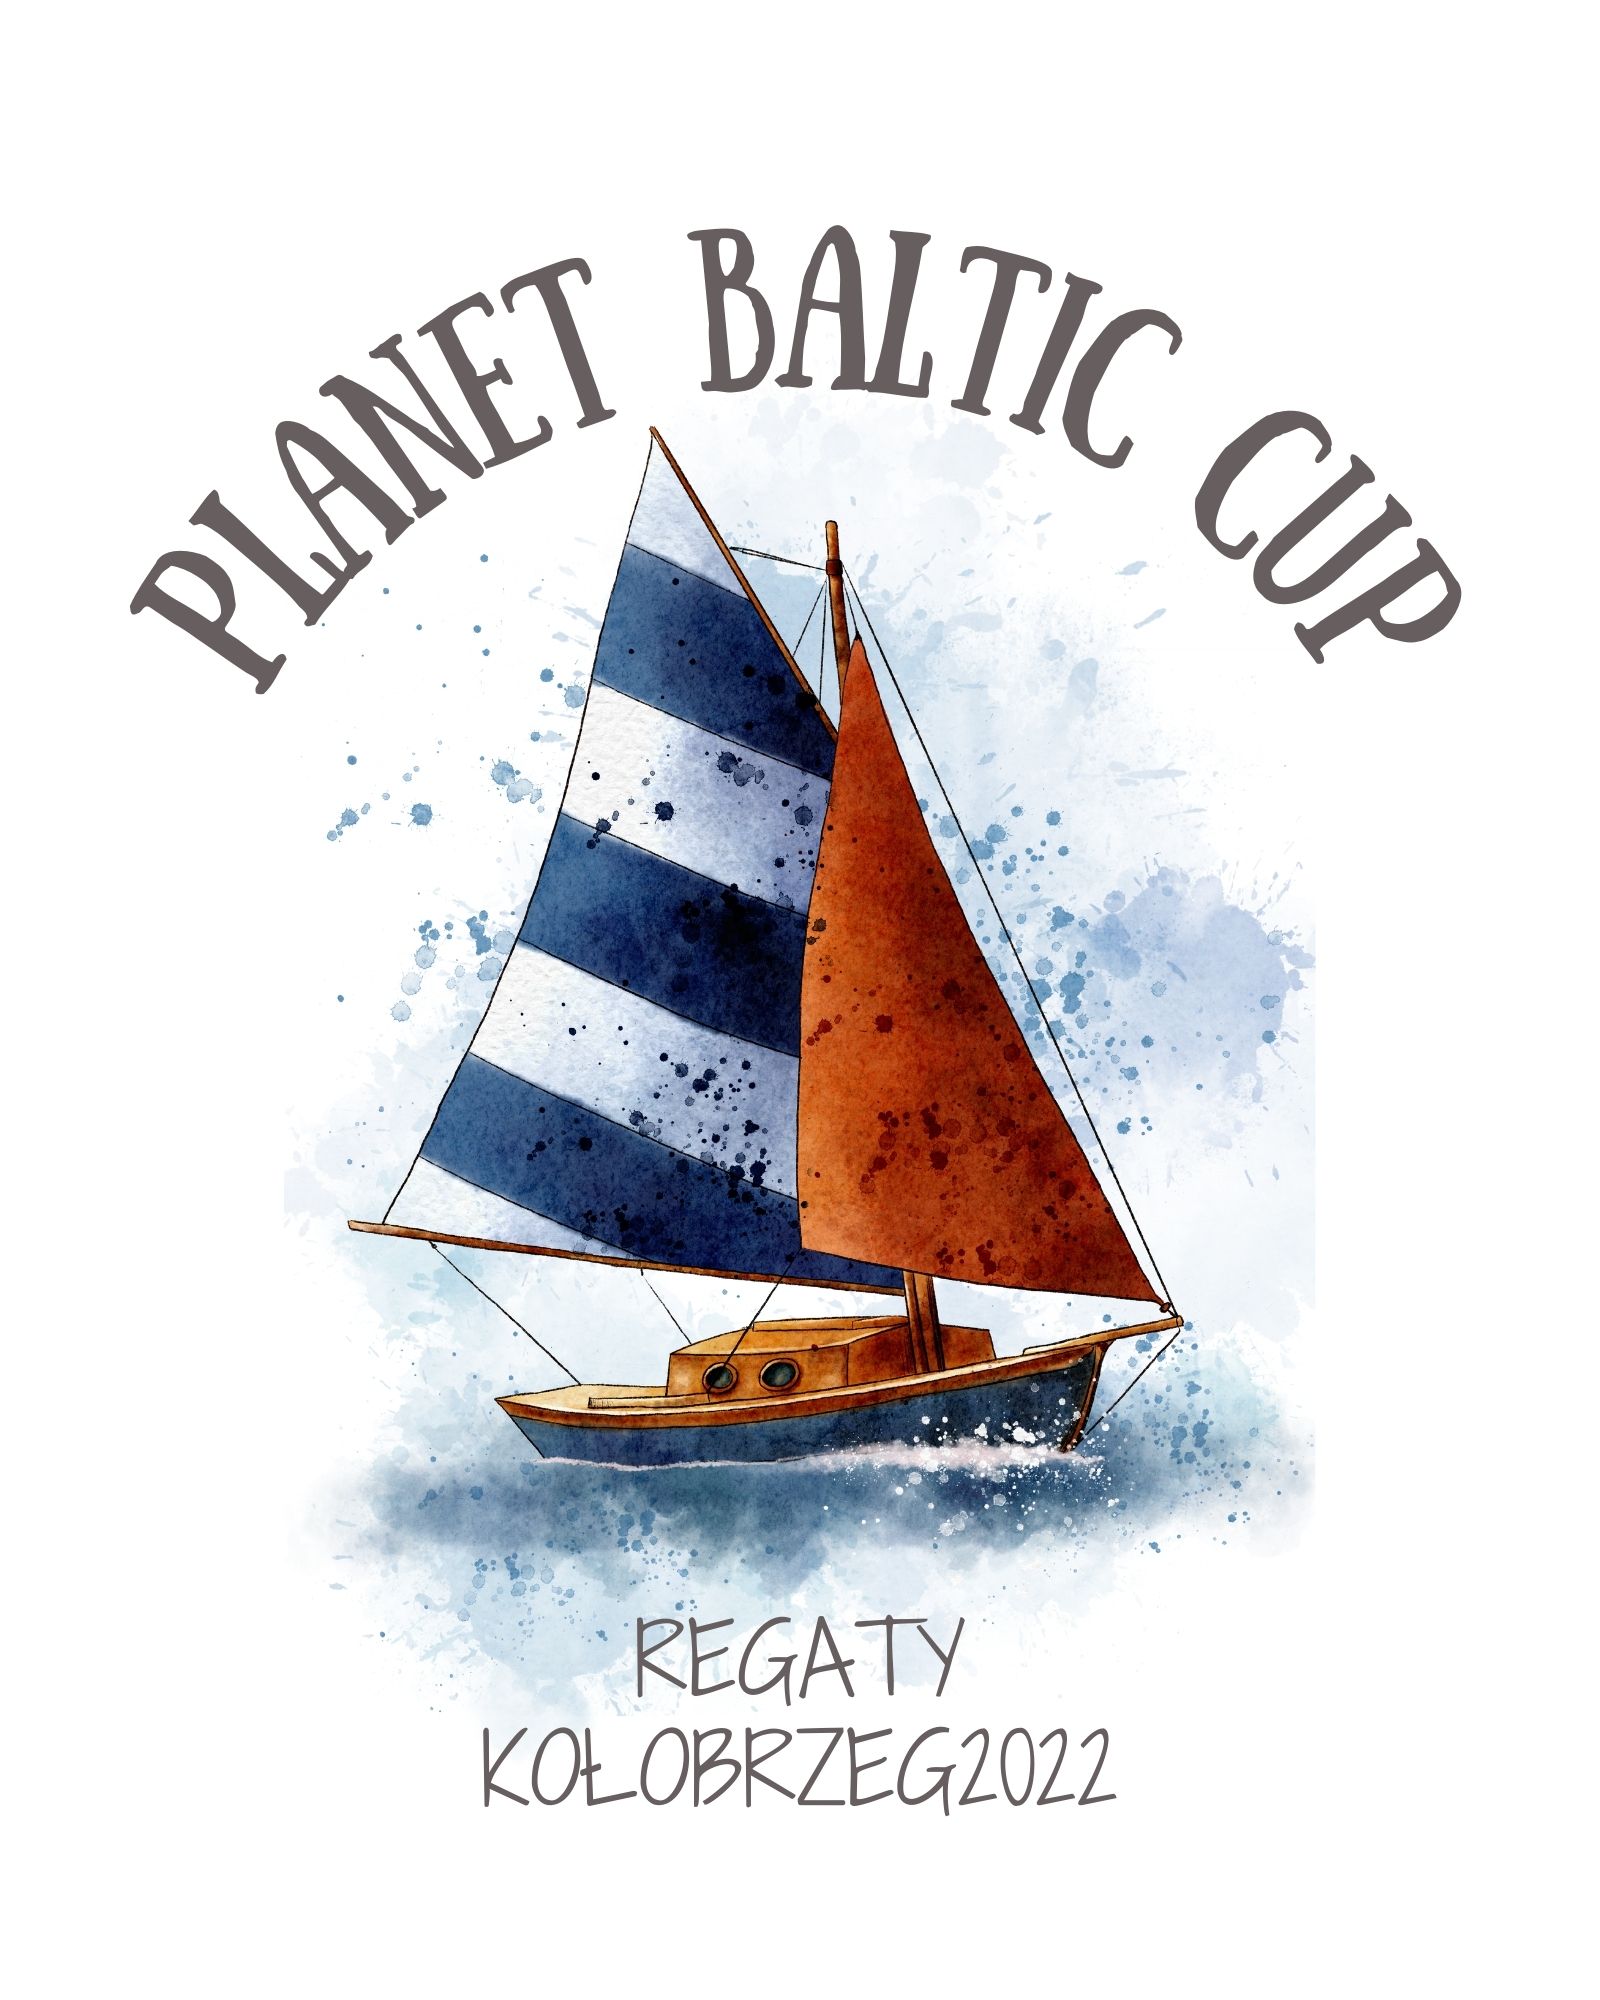 Regaty Planet Baltic Cup